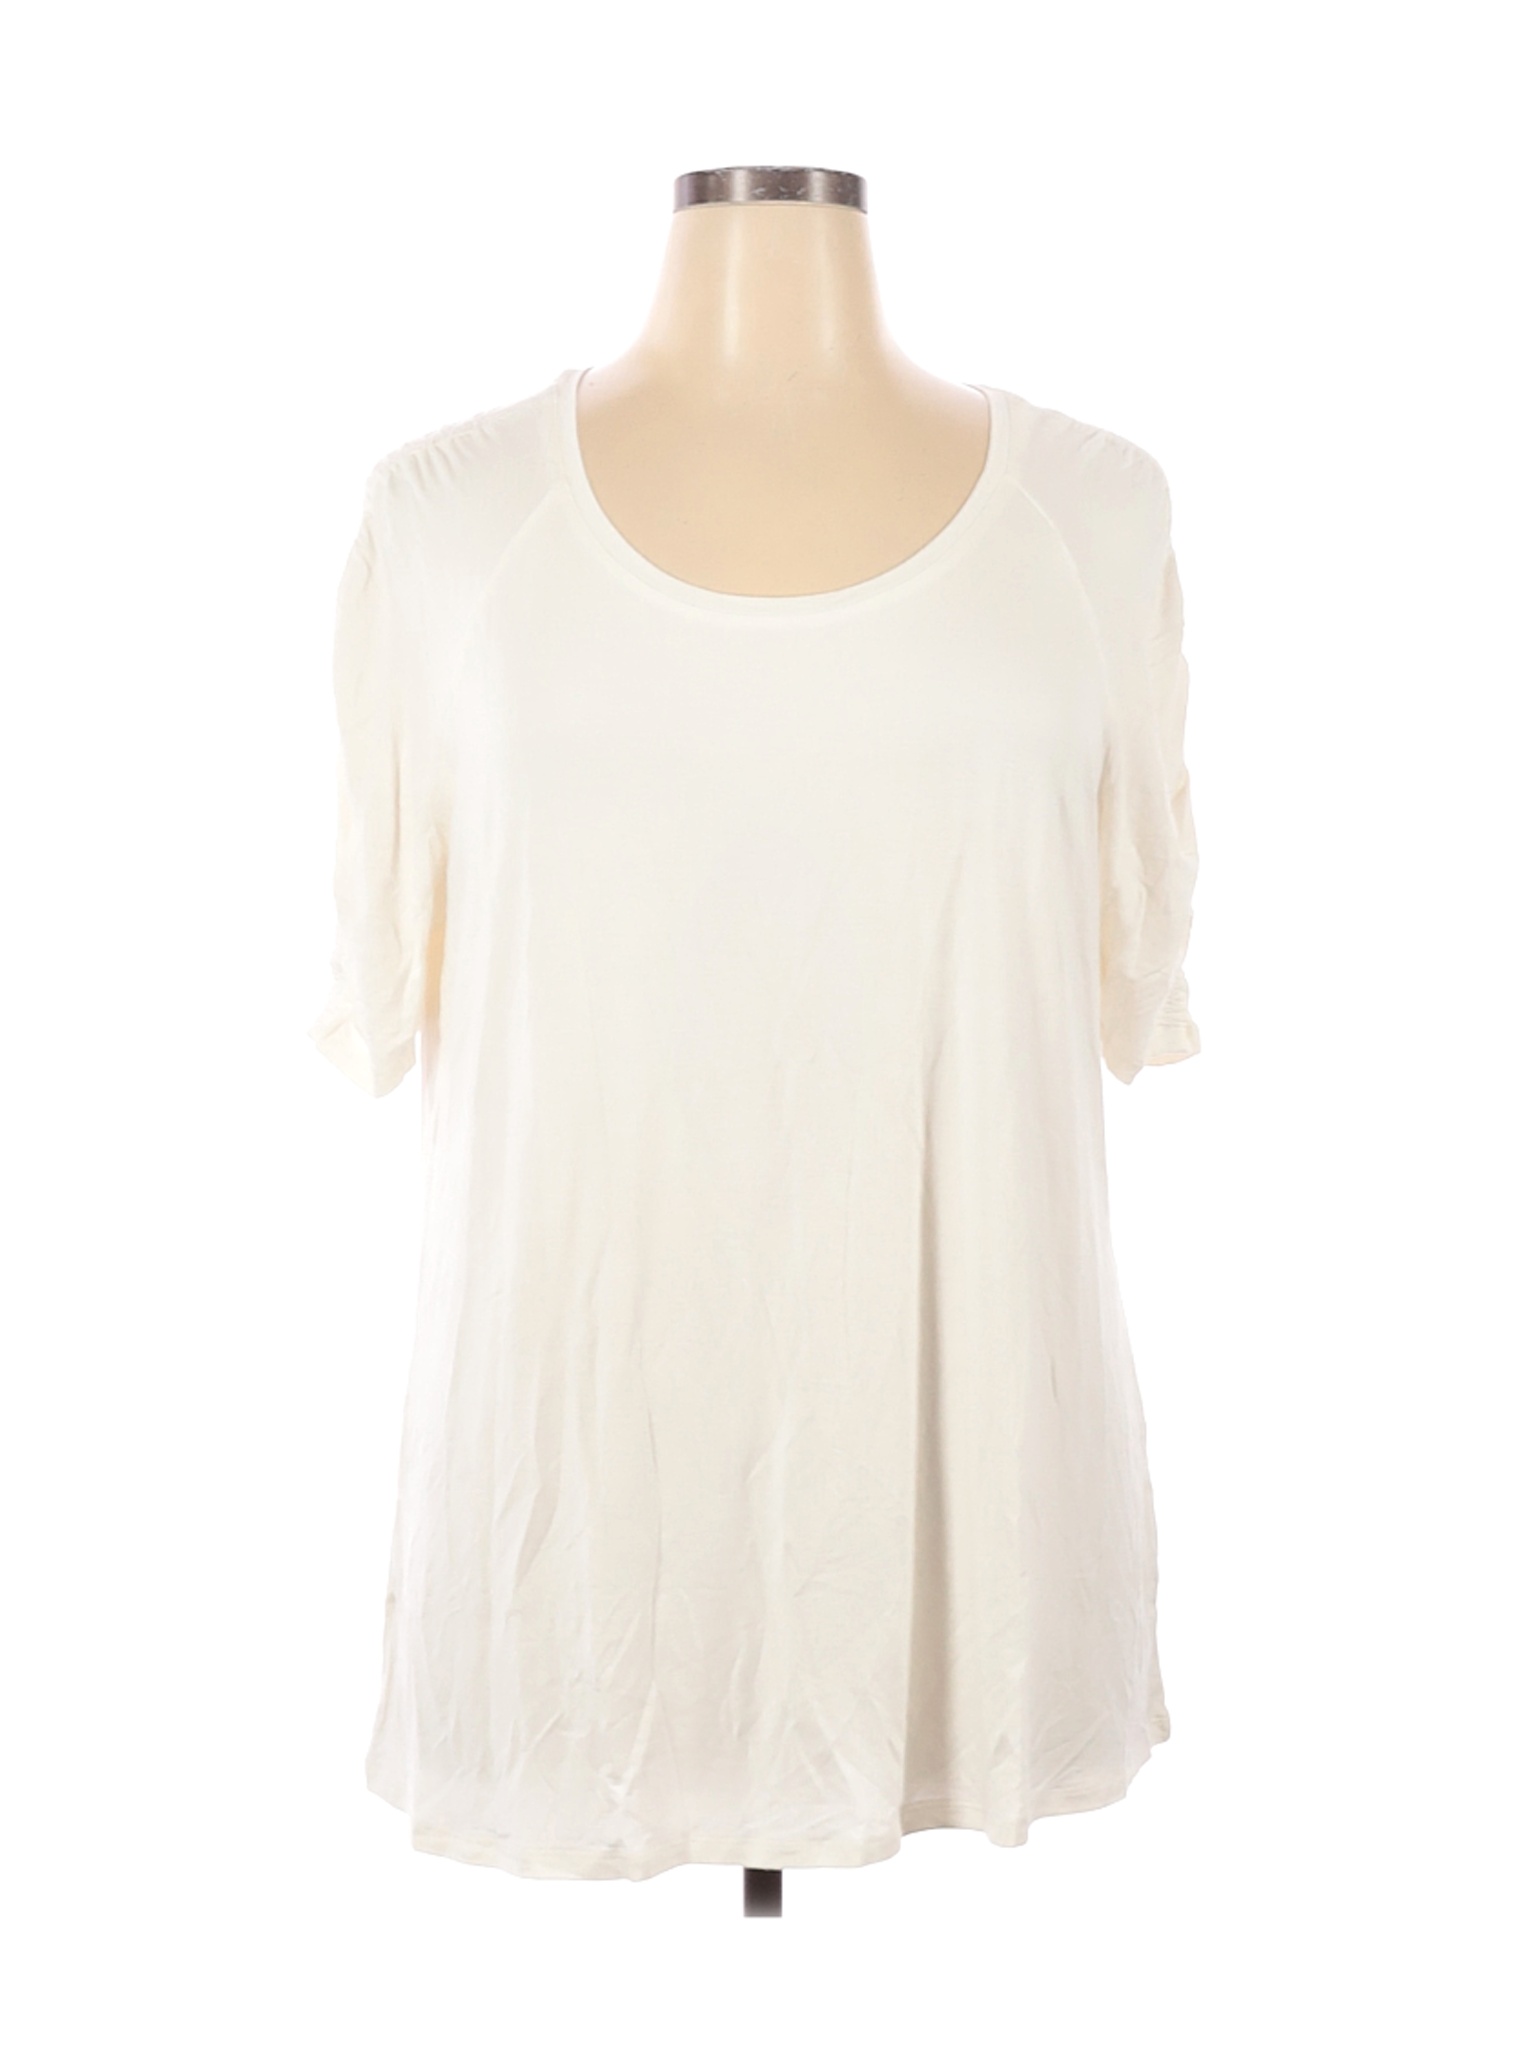 H By Halston Women Ivory Short Sleeve Top XL | eBay